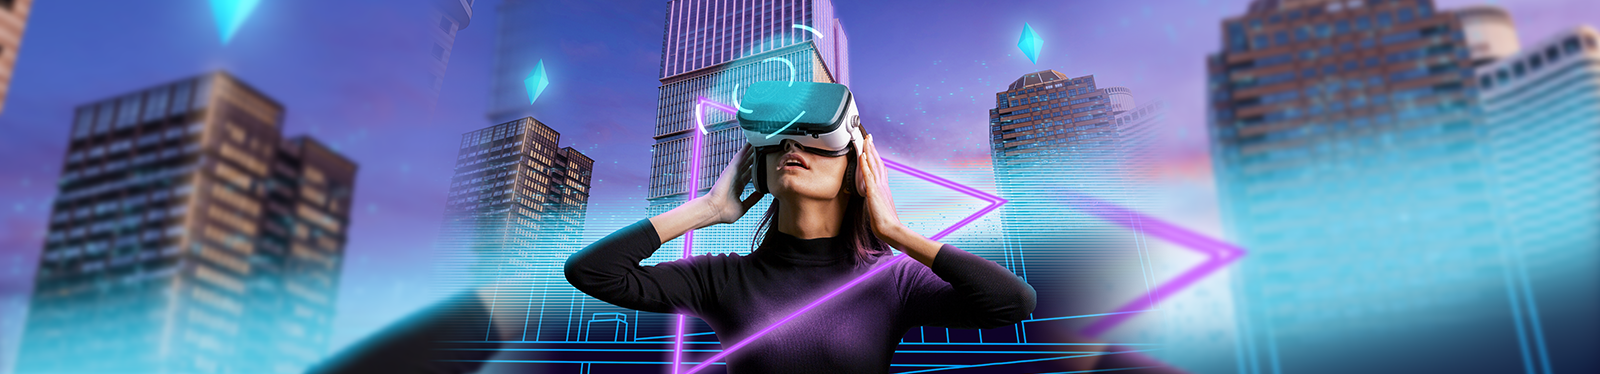 Metaverse & Virtual Reality